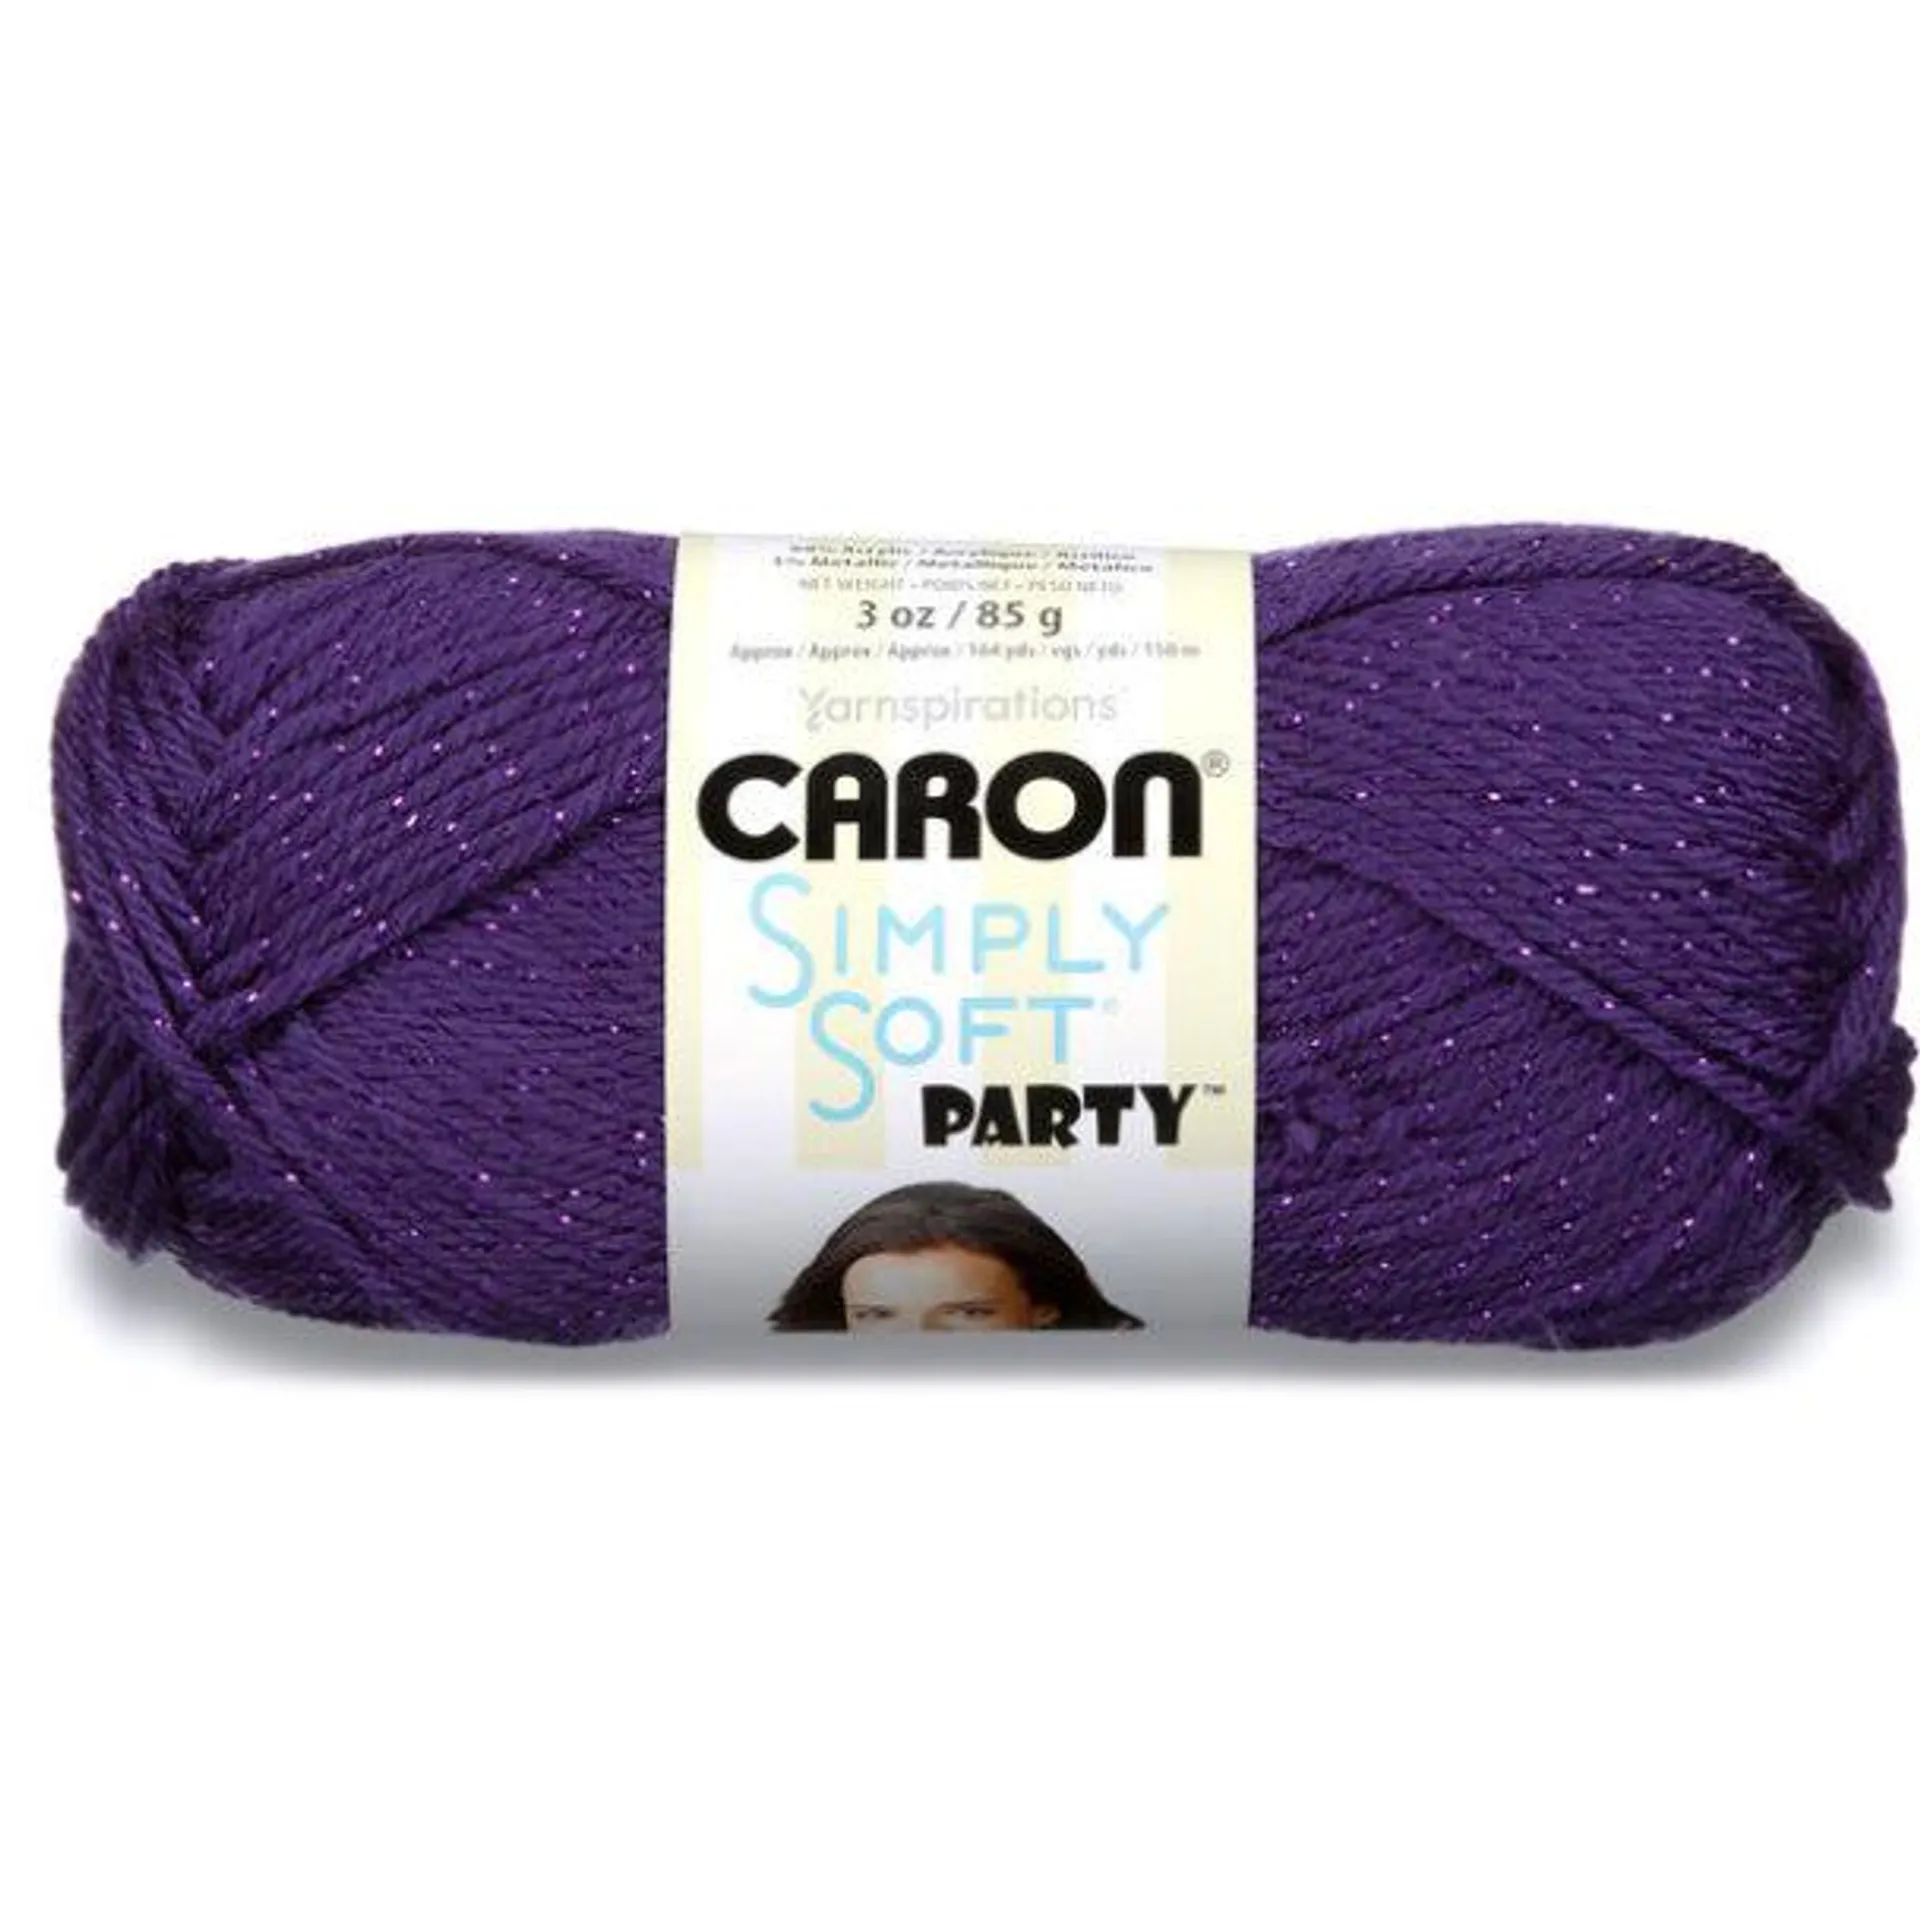 Simply Soft Party - 85g - Caron